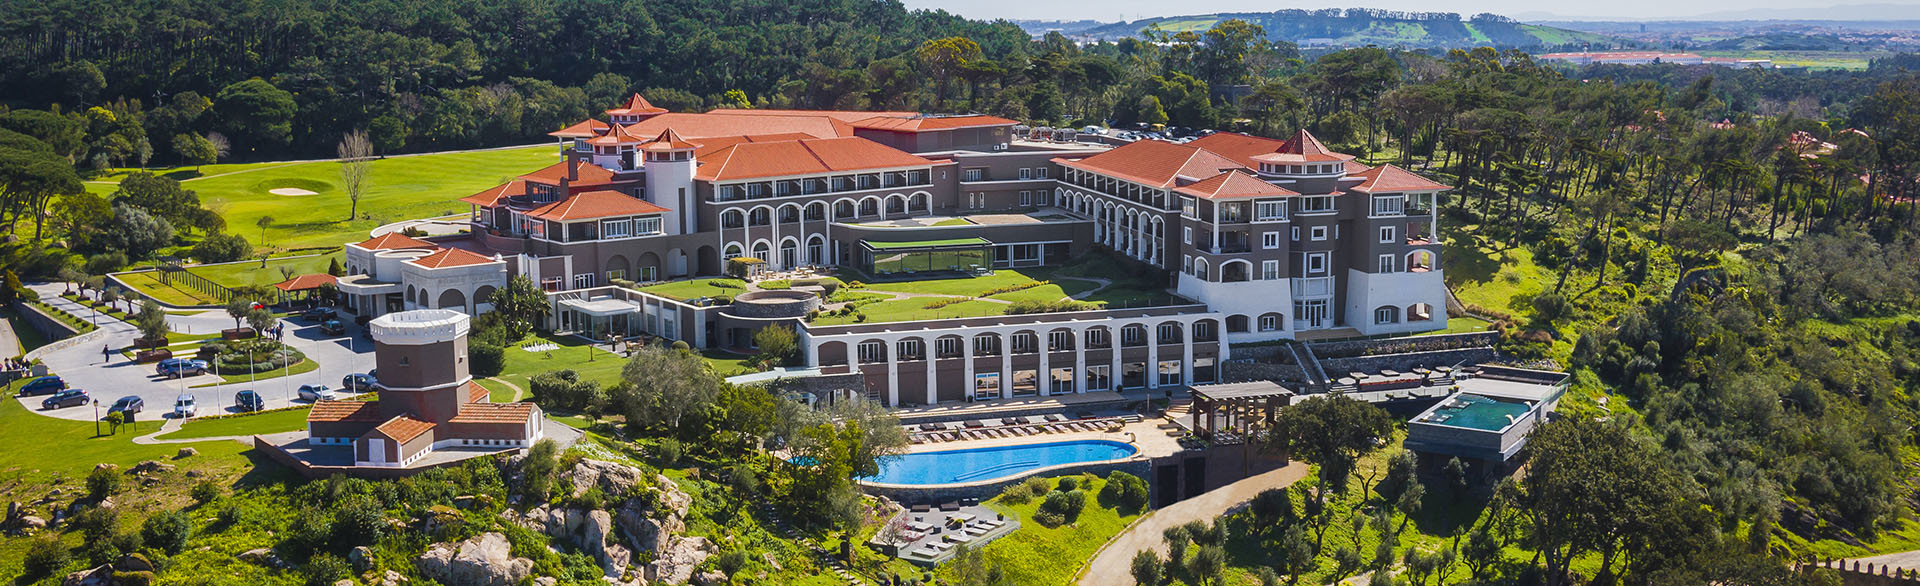 news-main-portugals-lenha-longa-hotel-golf-resort-sold.1547482697.jpg